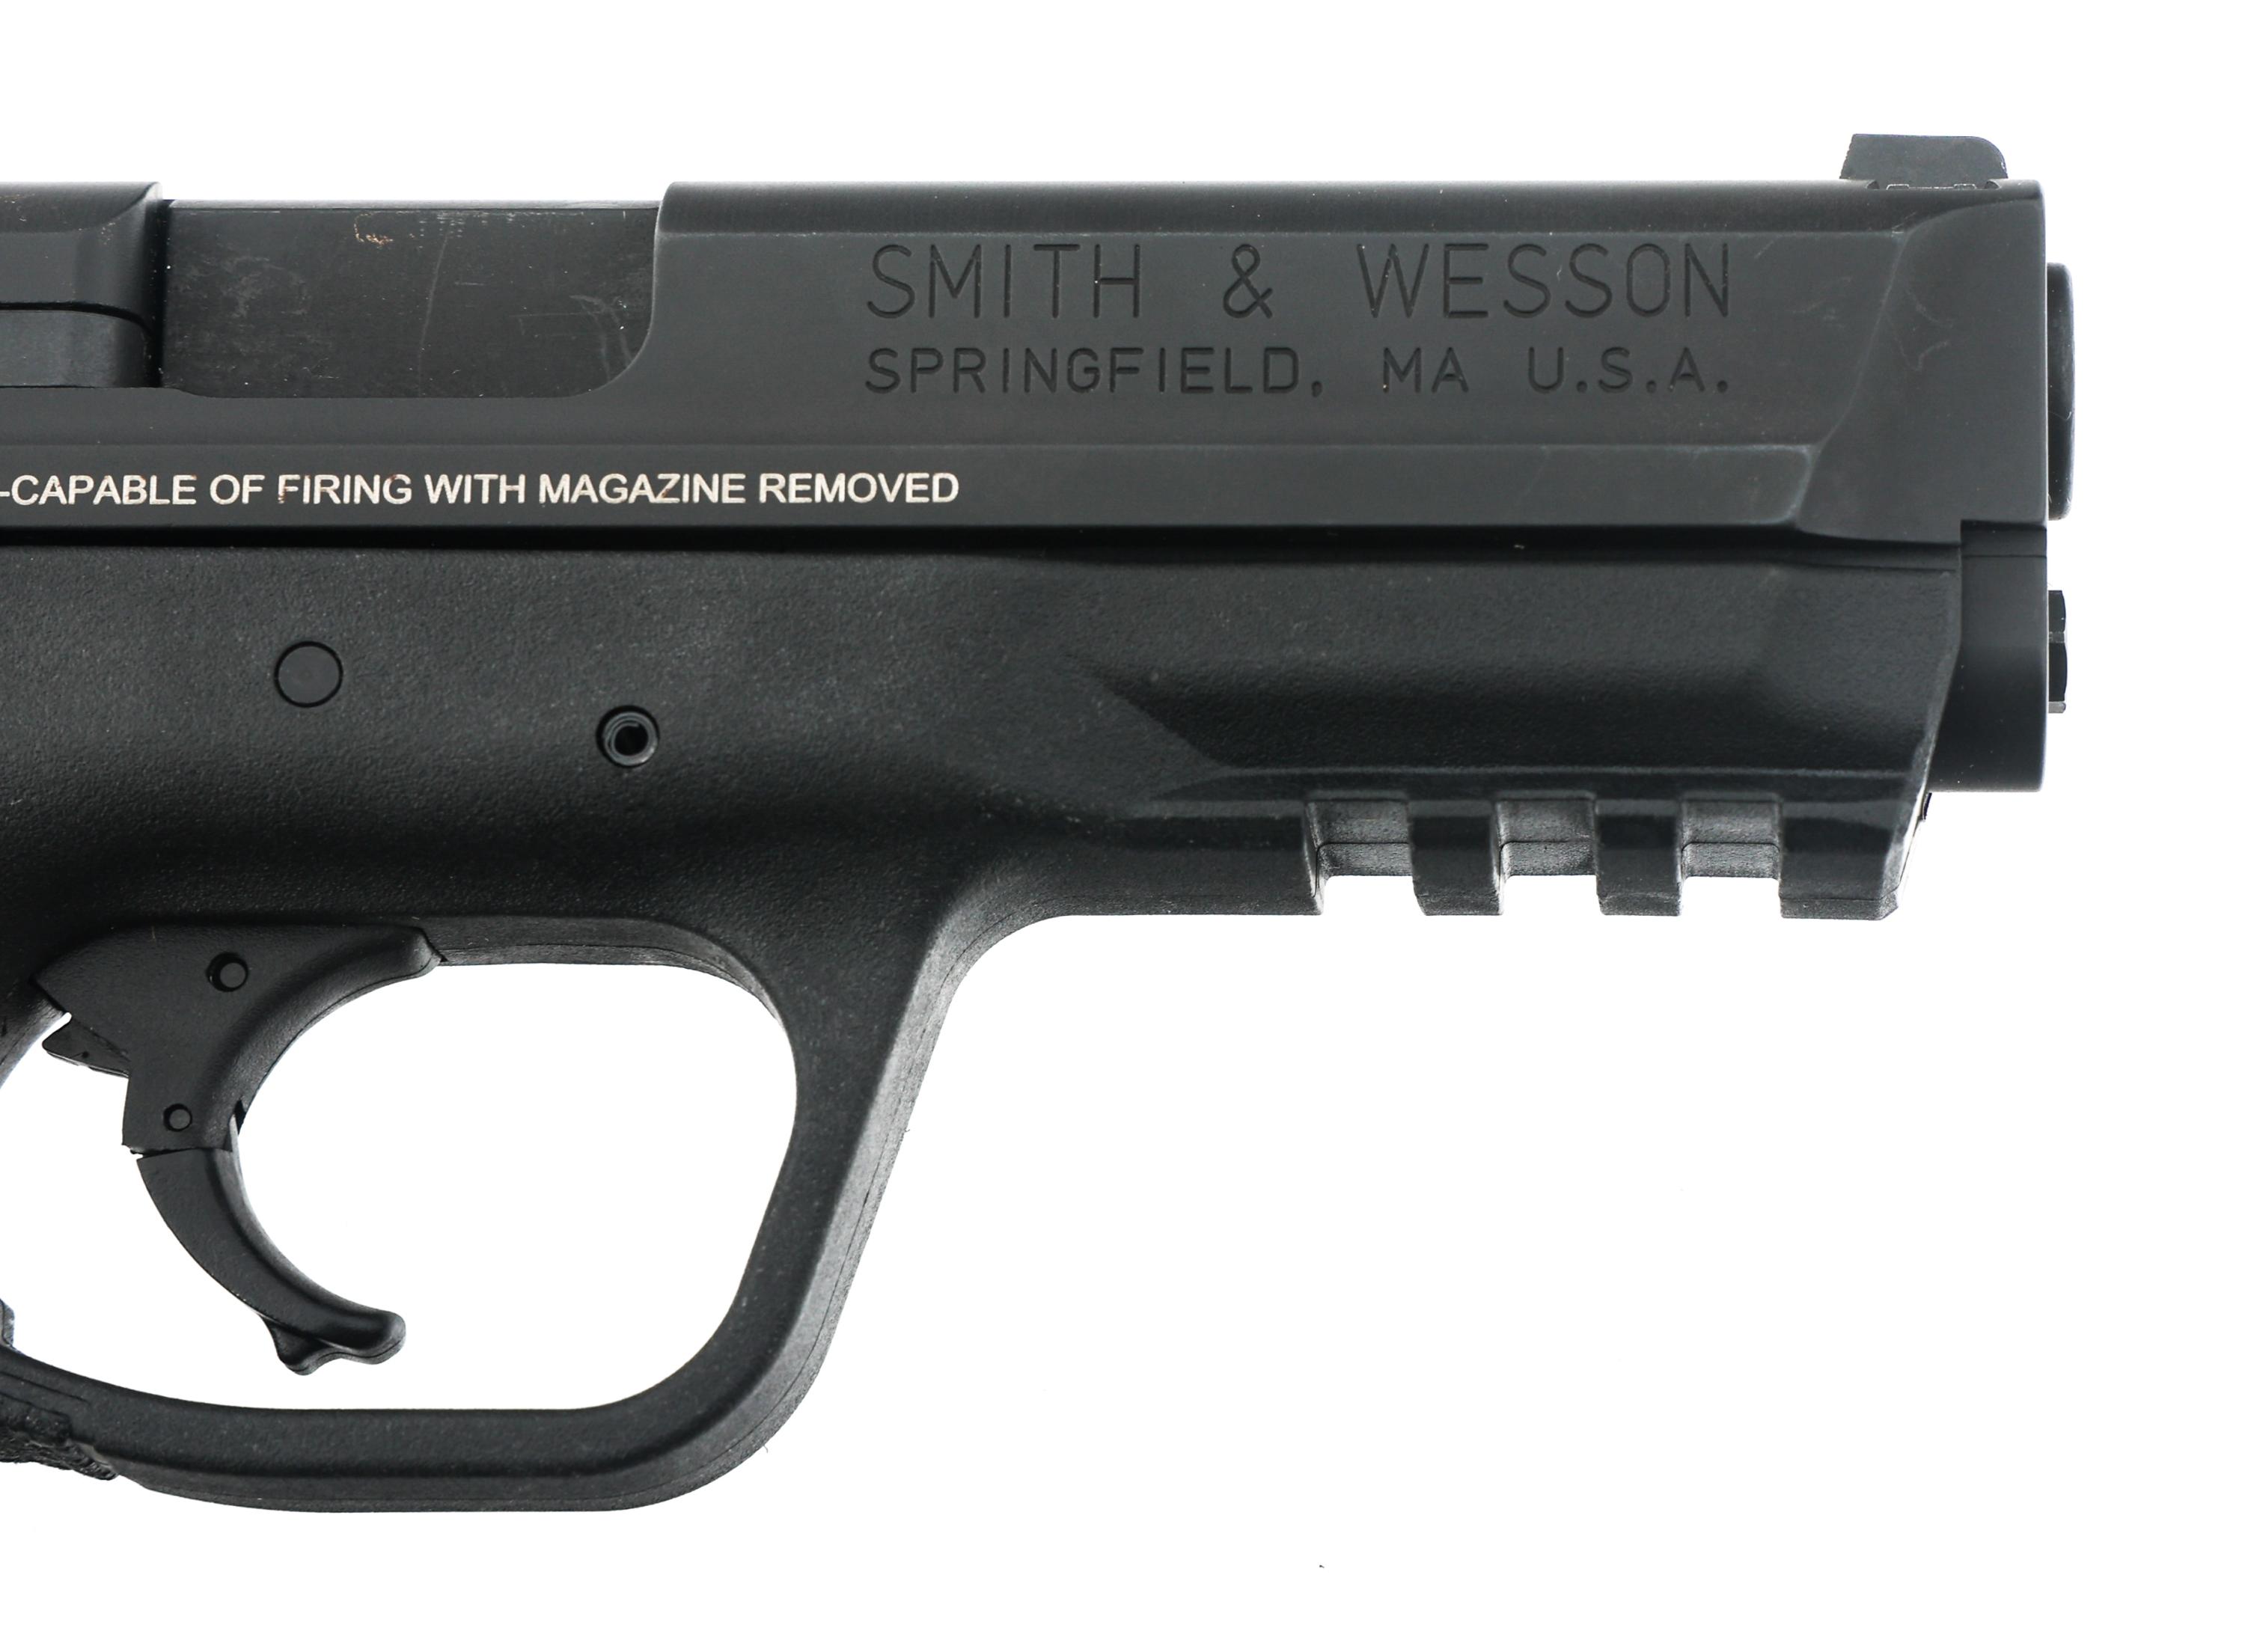 SMITH & WESSON M&P9 9x19mm CALIBER PISTOL